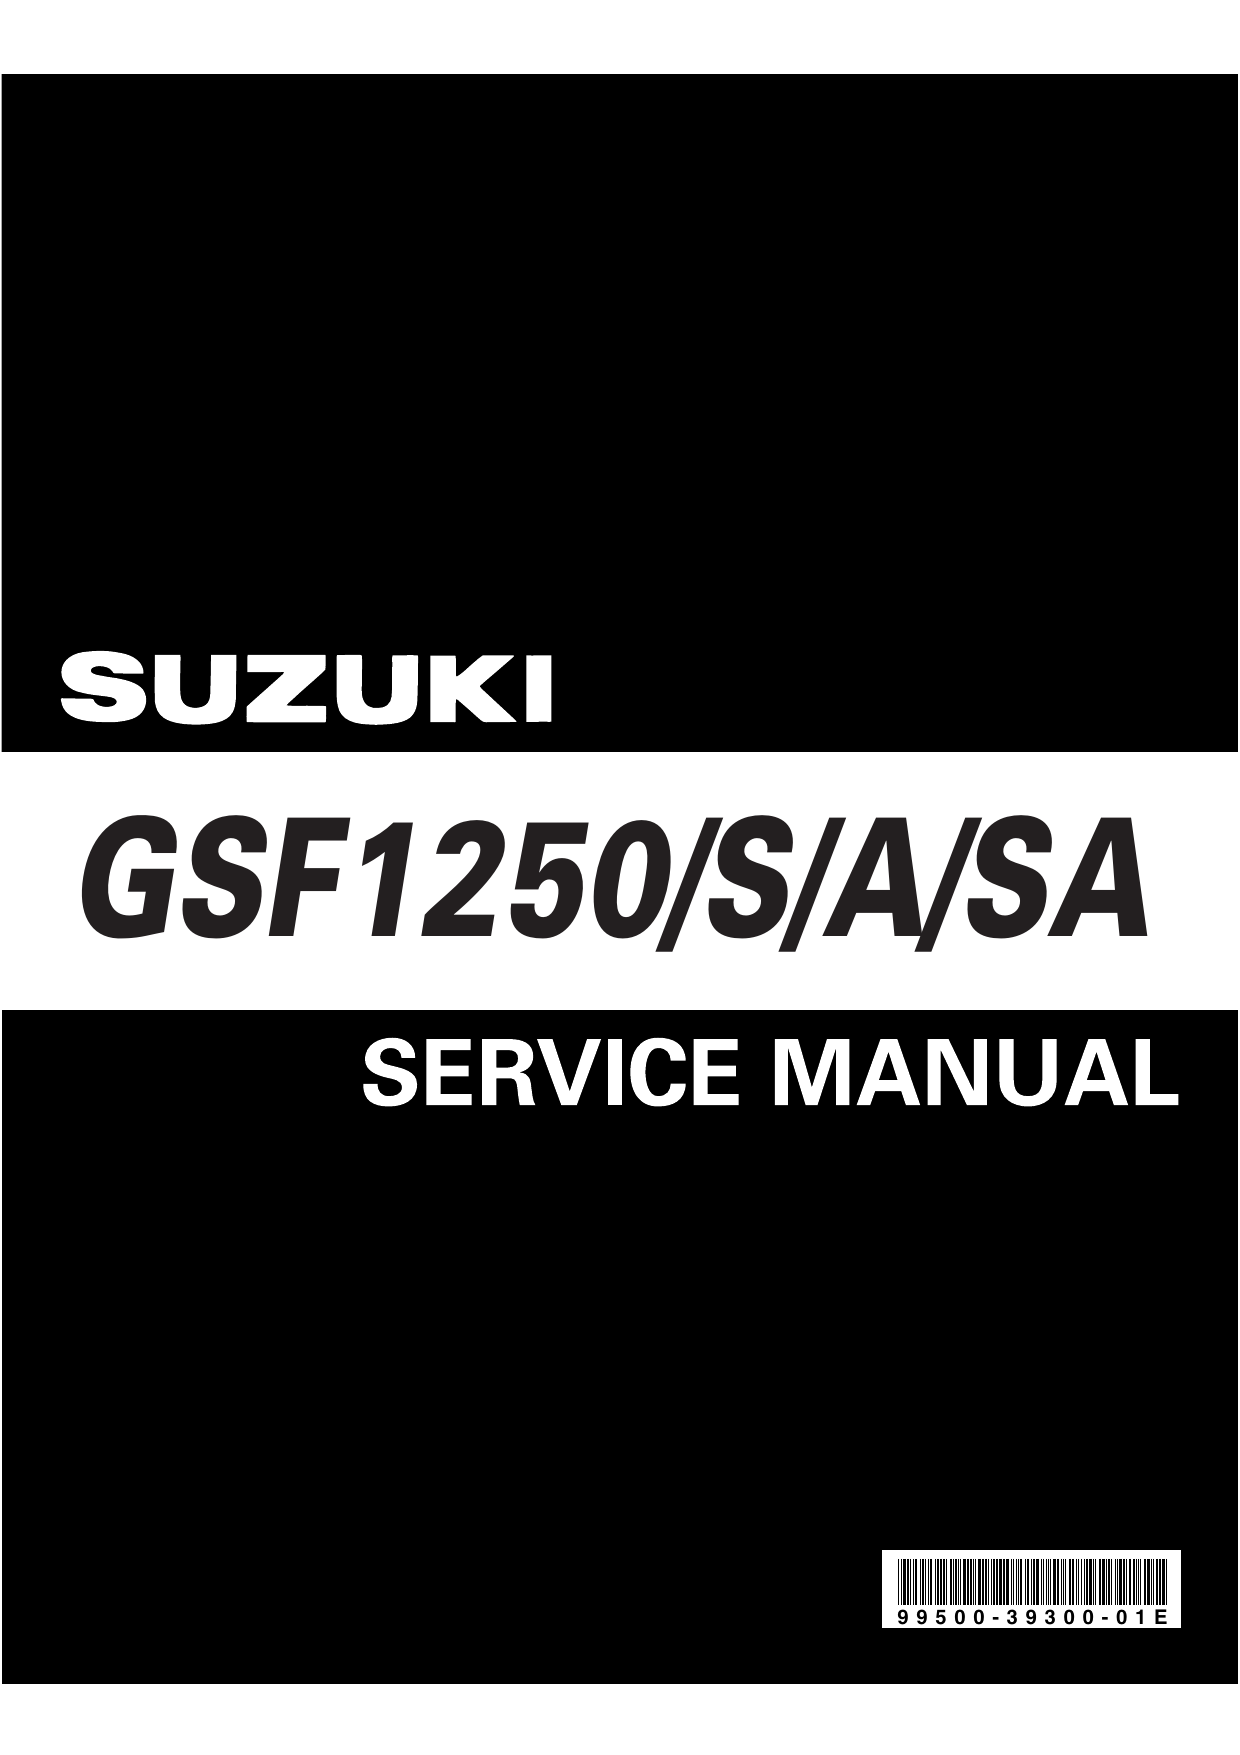 2007 Suzuki Bandit 1250/S/A/SA service manual Preview image 1